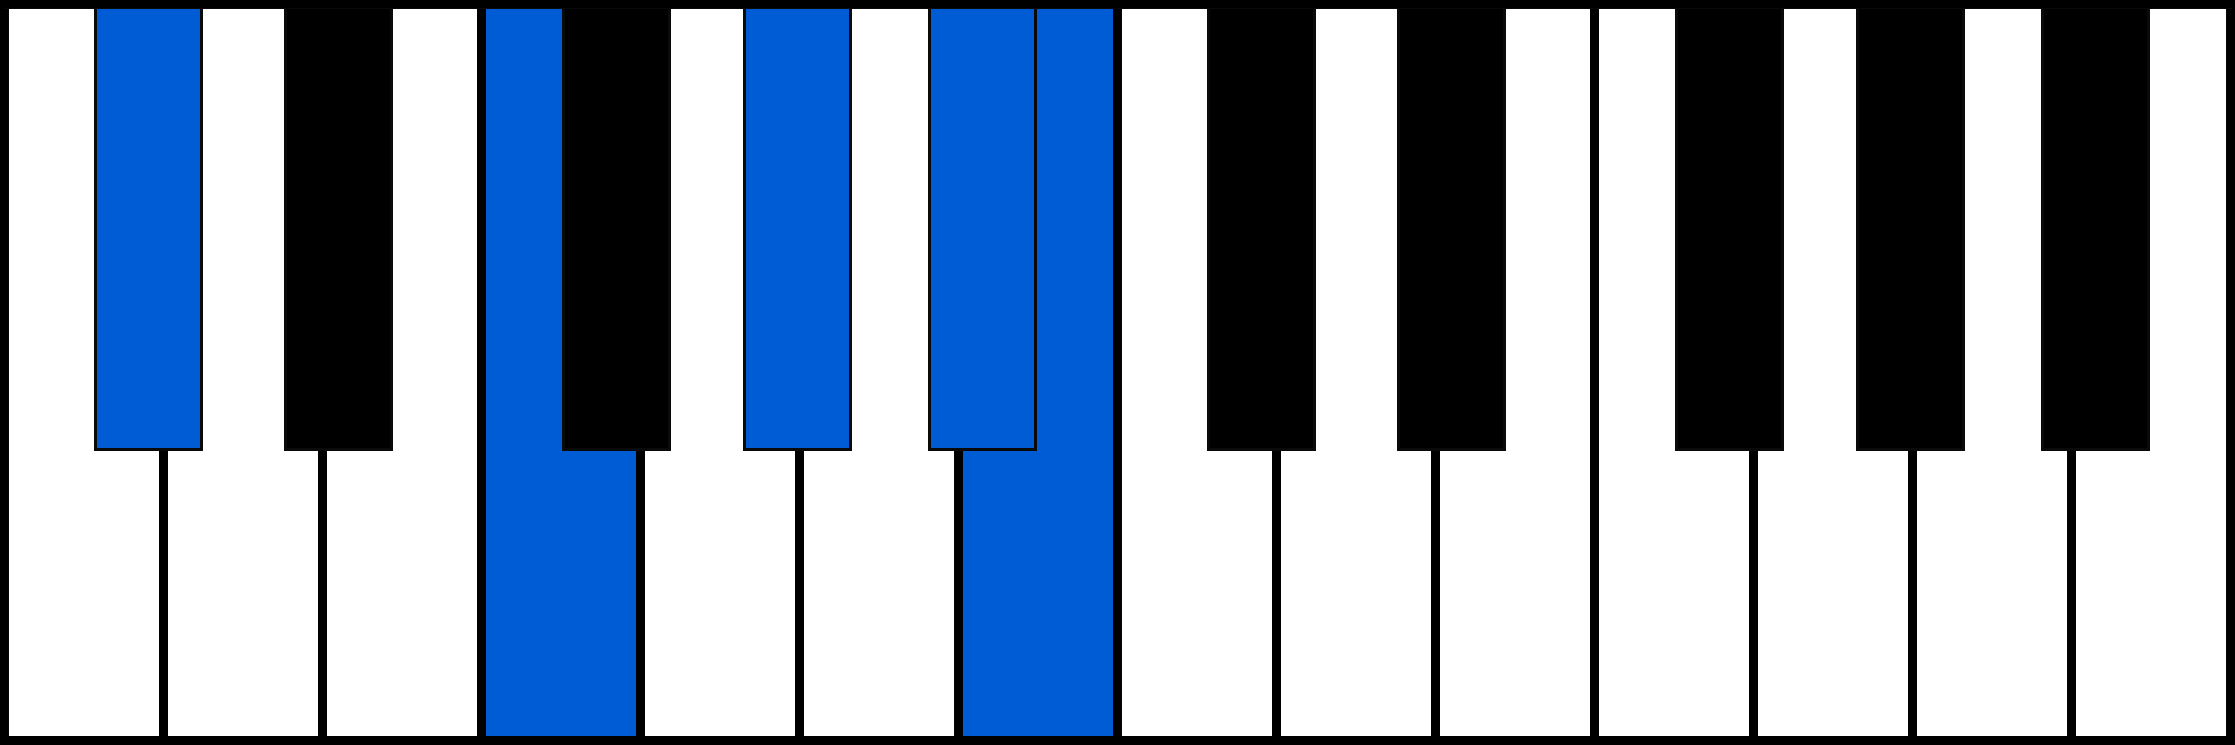 C#7/6 piano chord fingering